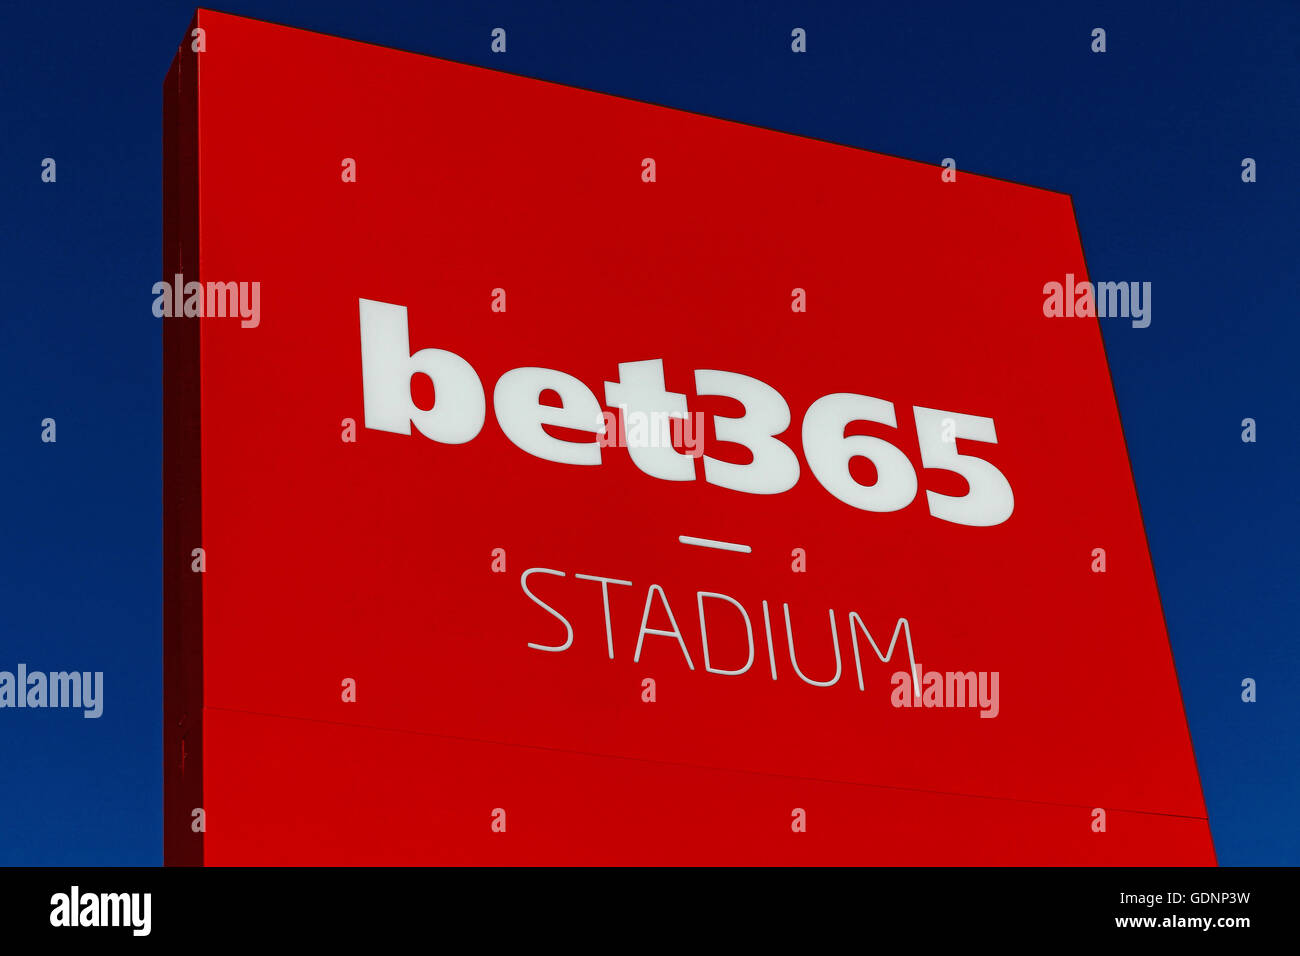 La bet365 Stadium, tierra natal del ex Premier League Football Club Stoke City, Stoke-on-Trent, Staffordshire Inglaterra Foto de stock